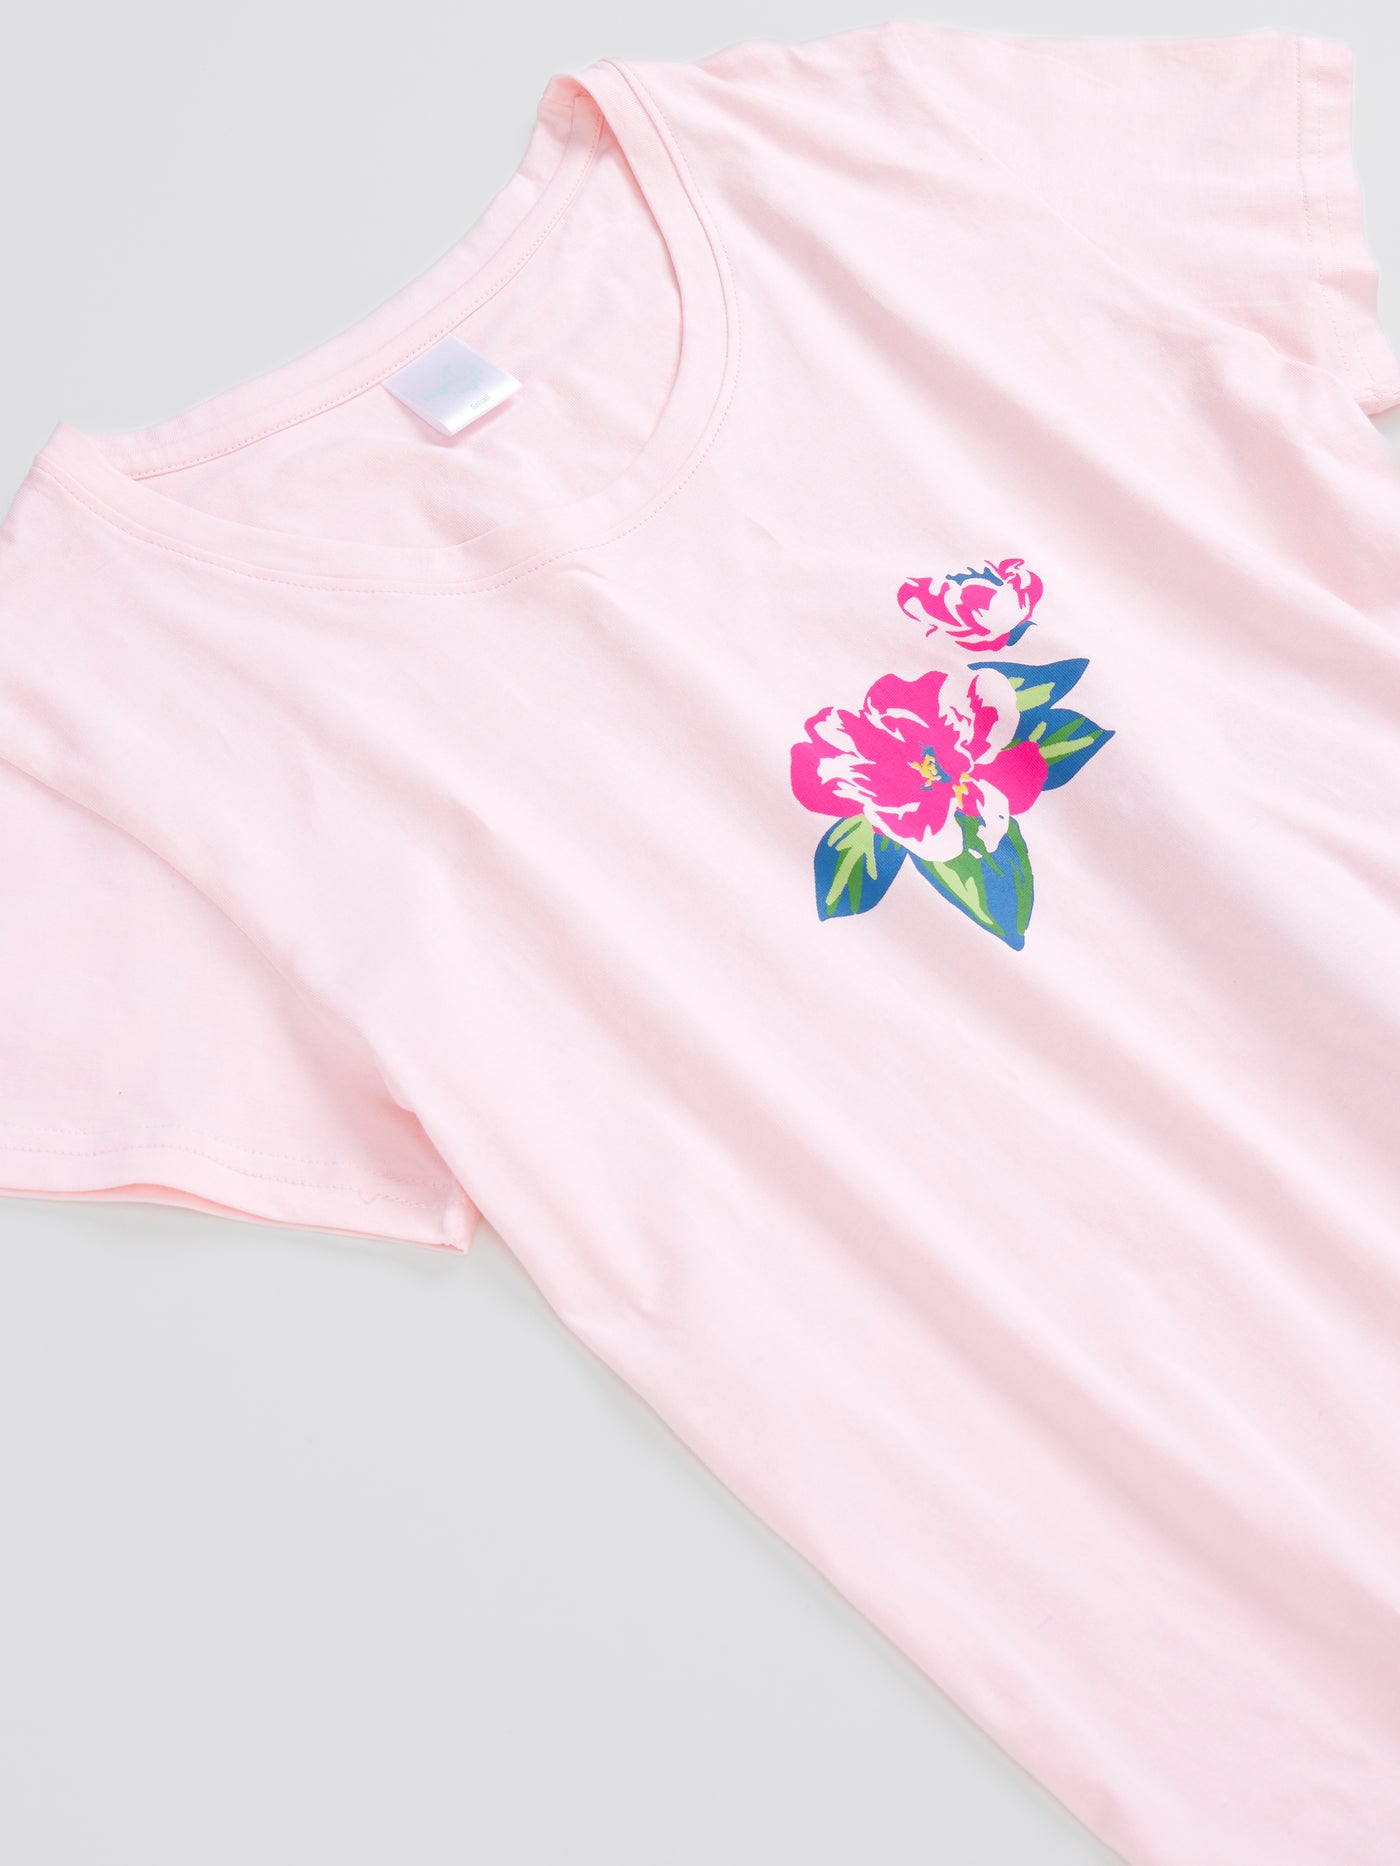 Retro Flowers Women's T-shirt PJ Set